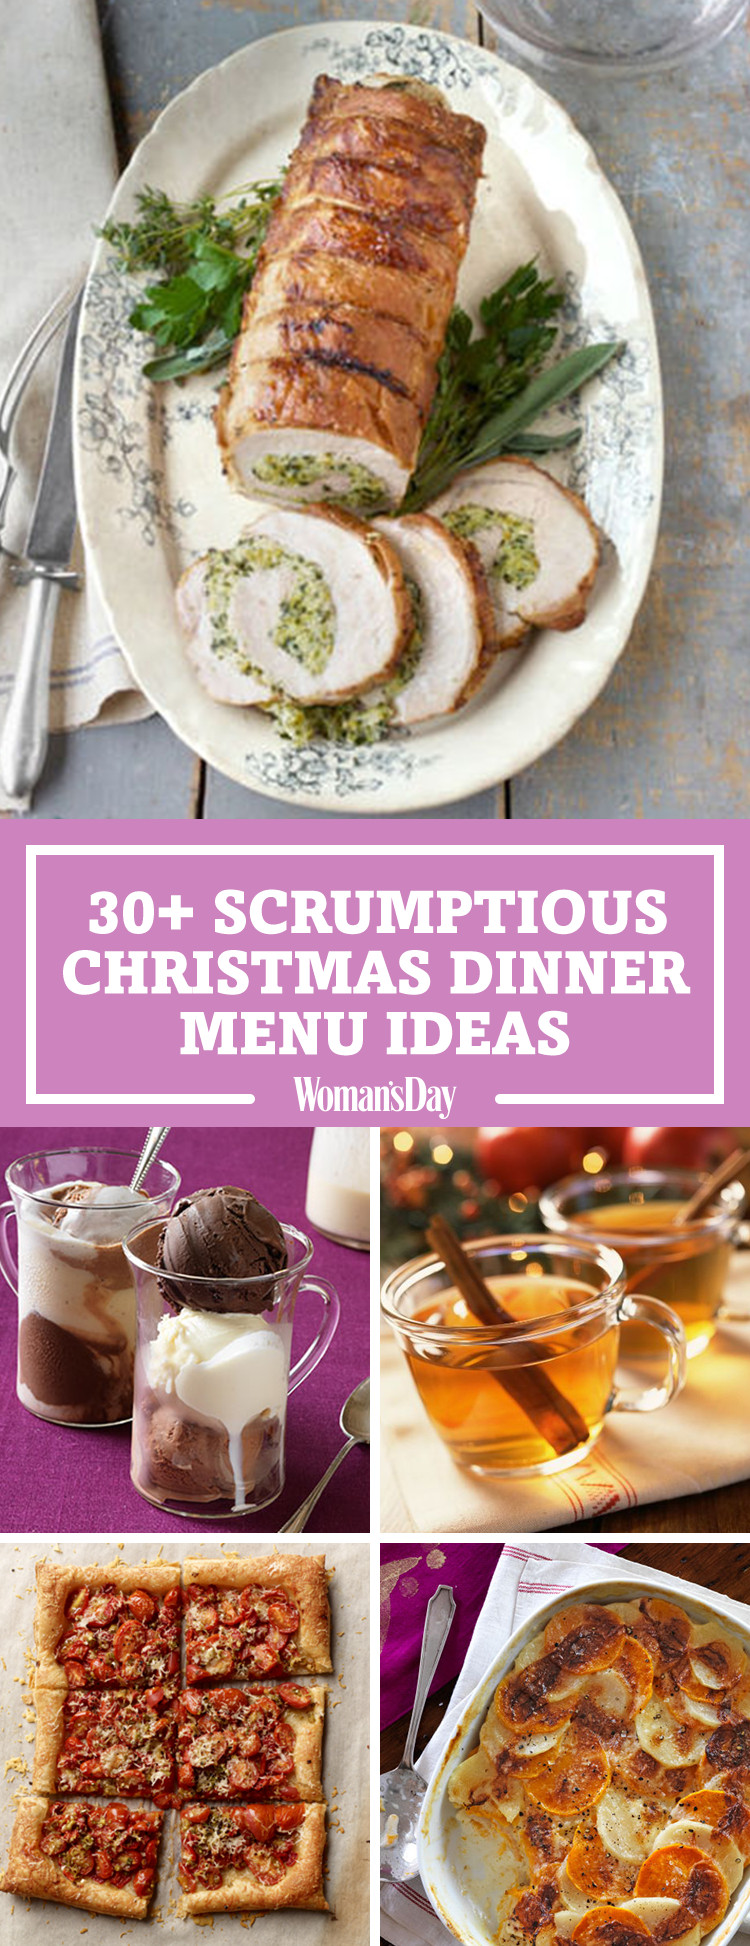 Christmas Dinner Ideas
 Best Christmas Dinner Menu Ideas for 2017